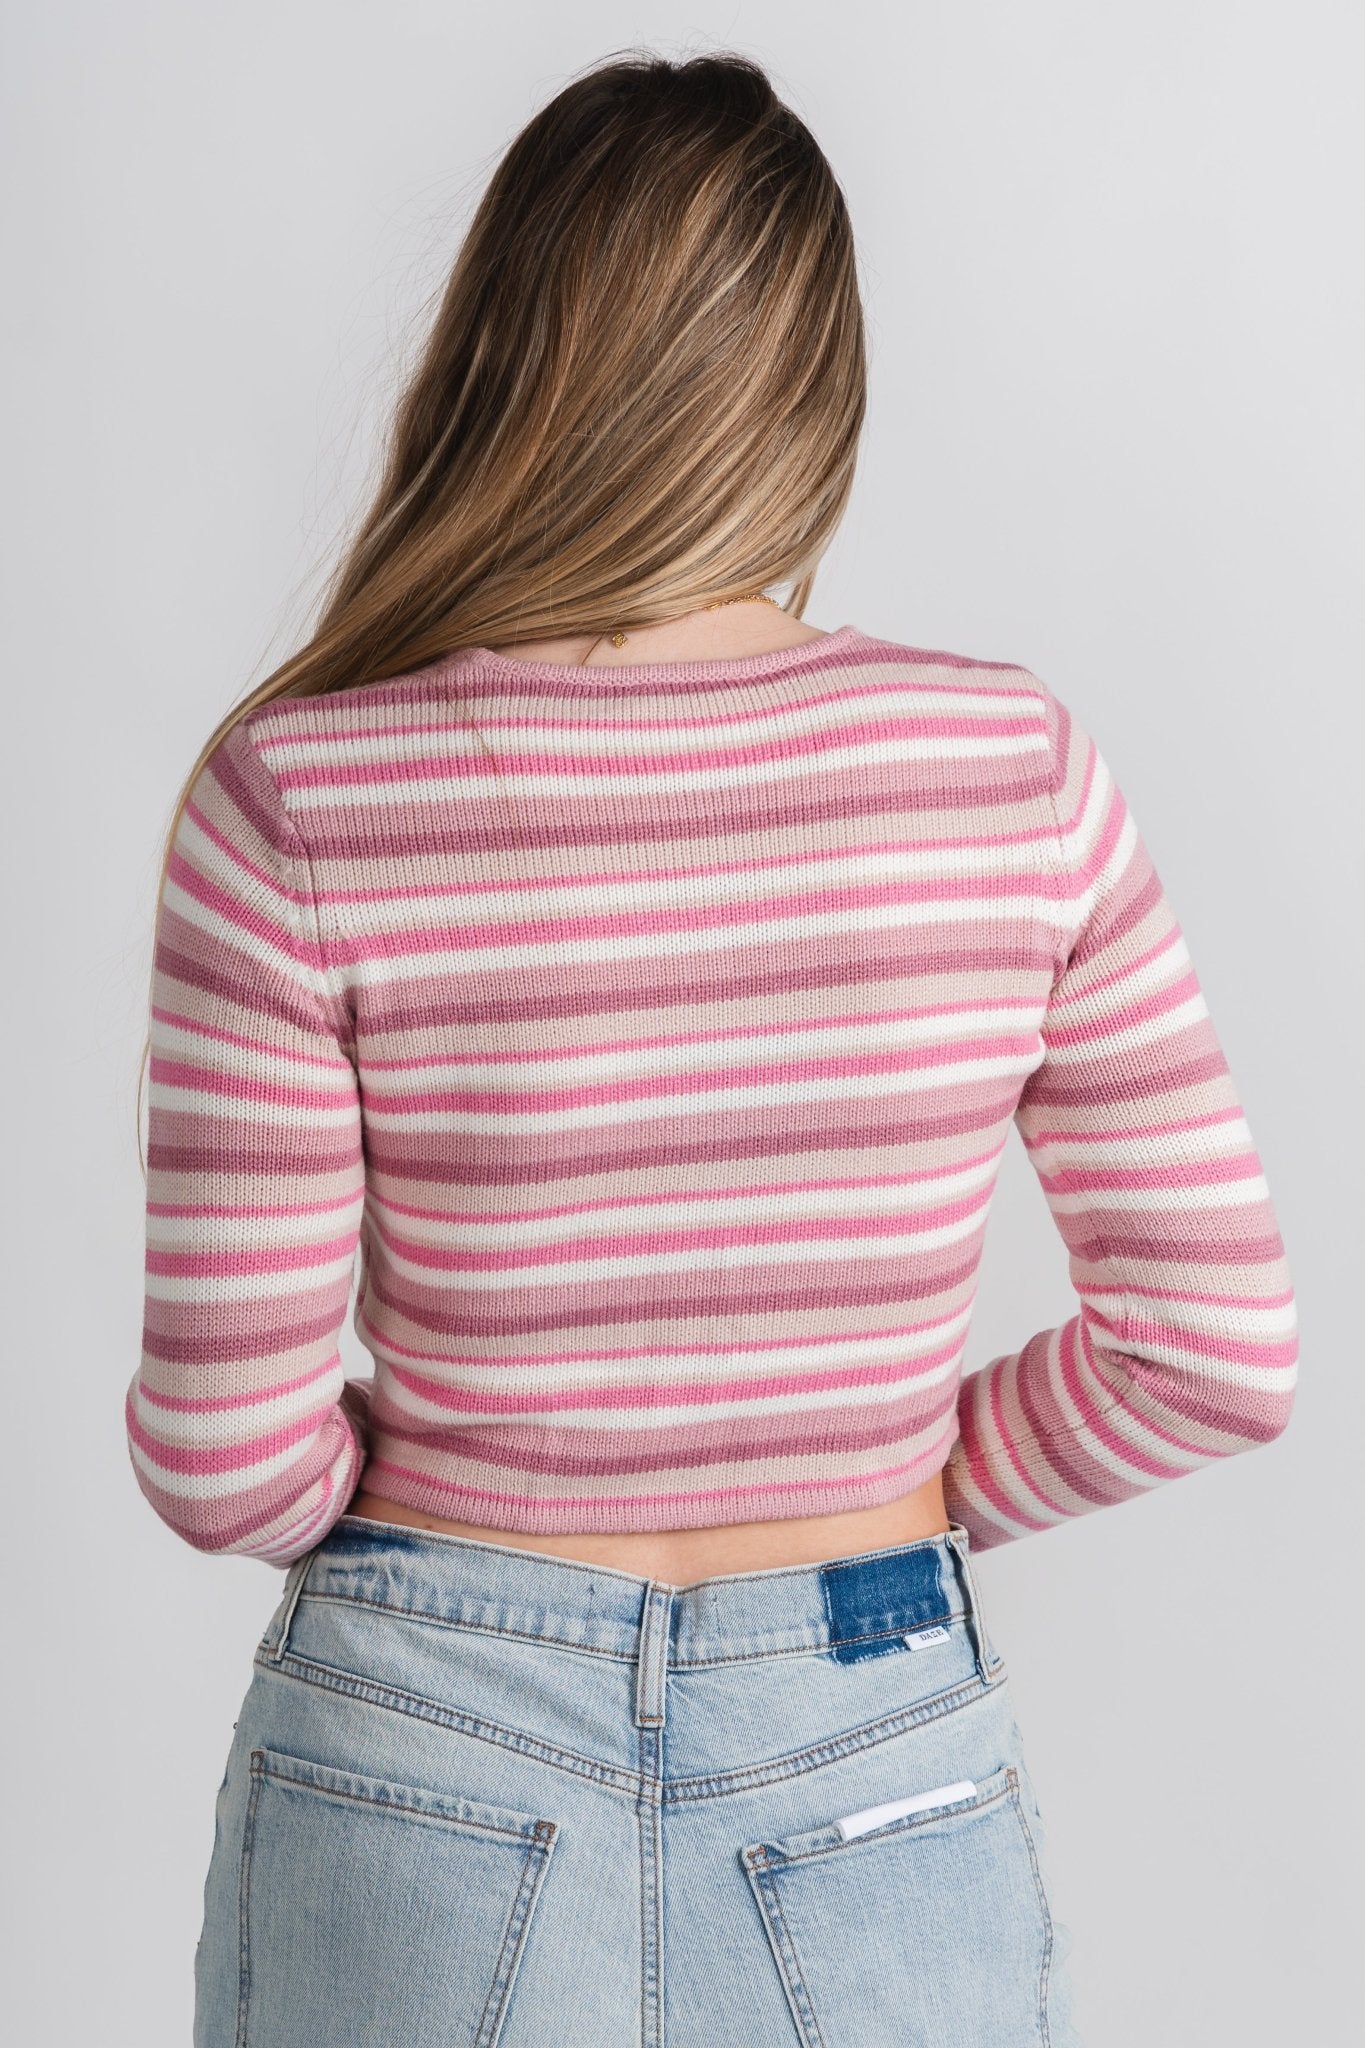 Striped sweater cardigan pink/white